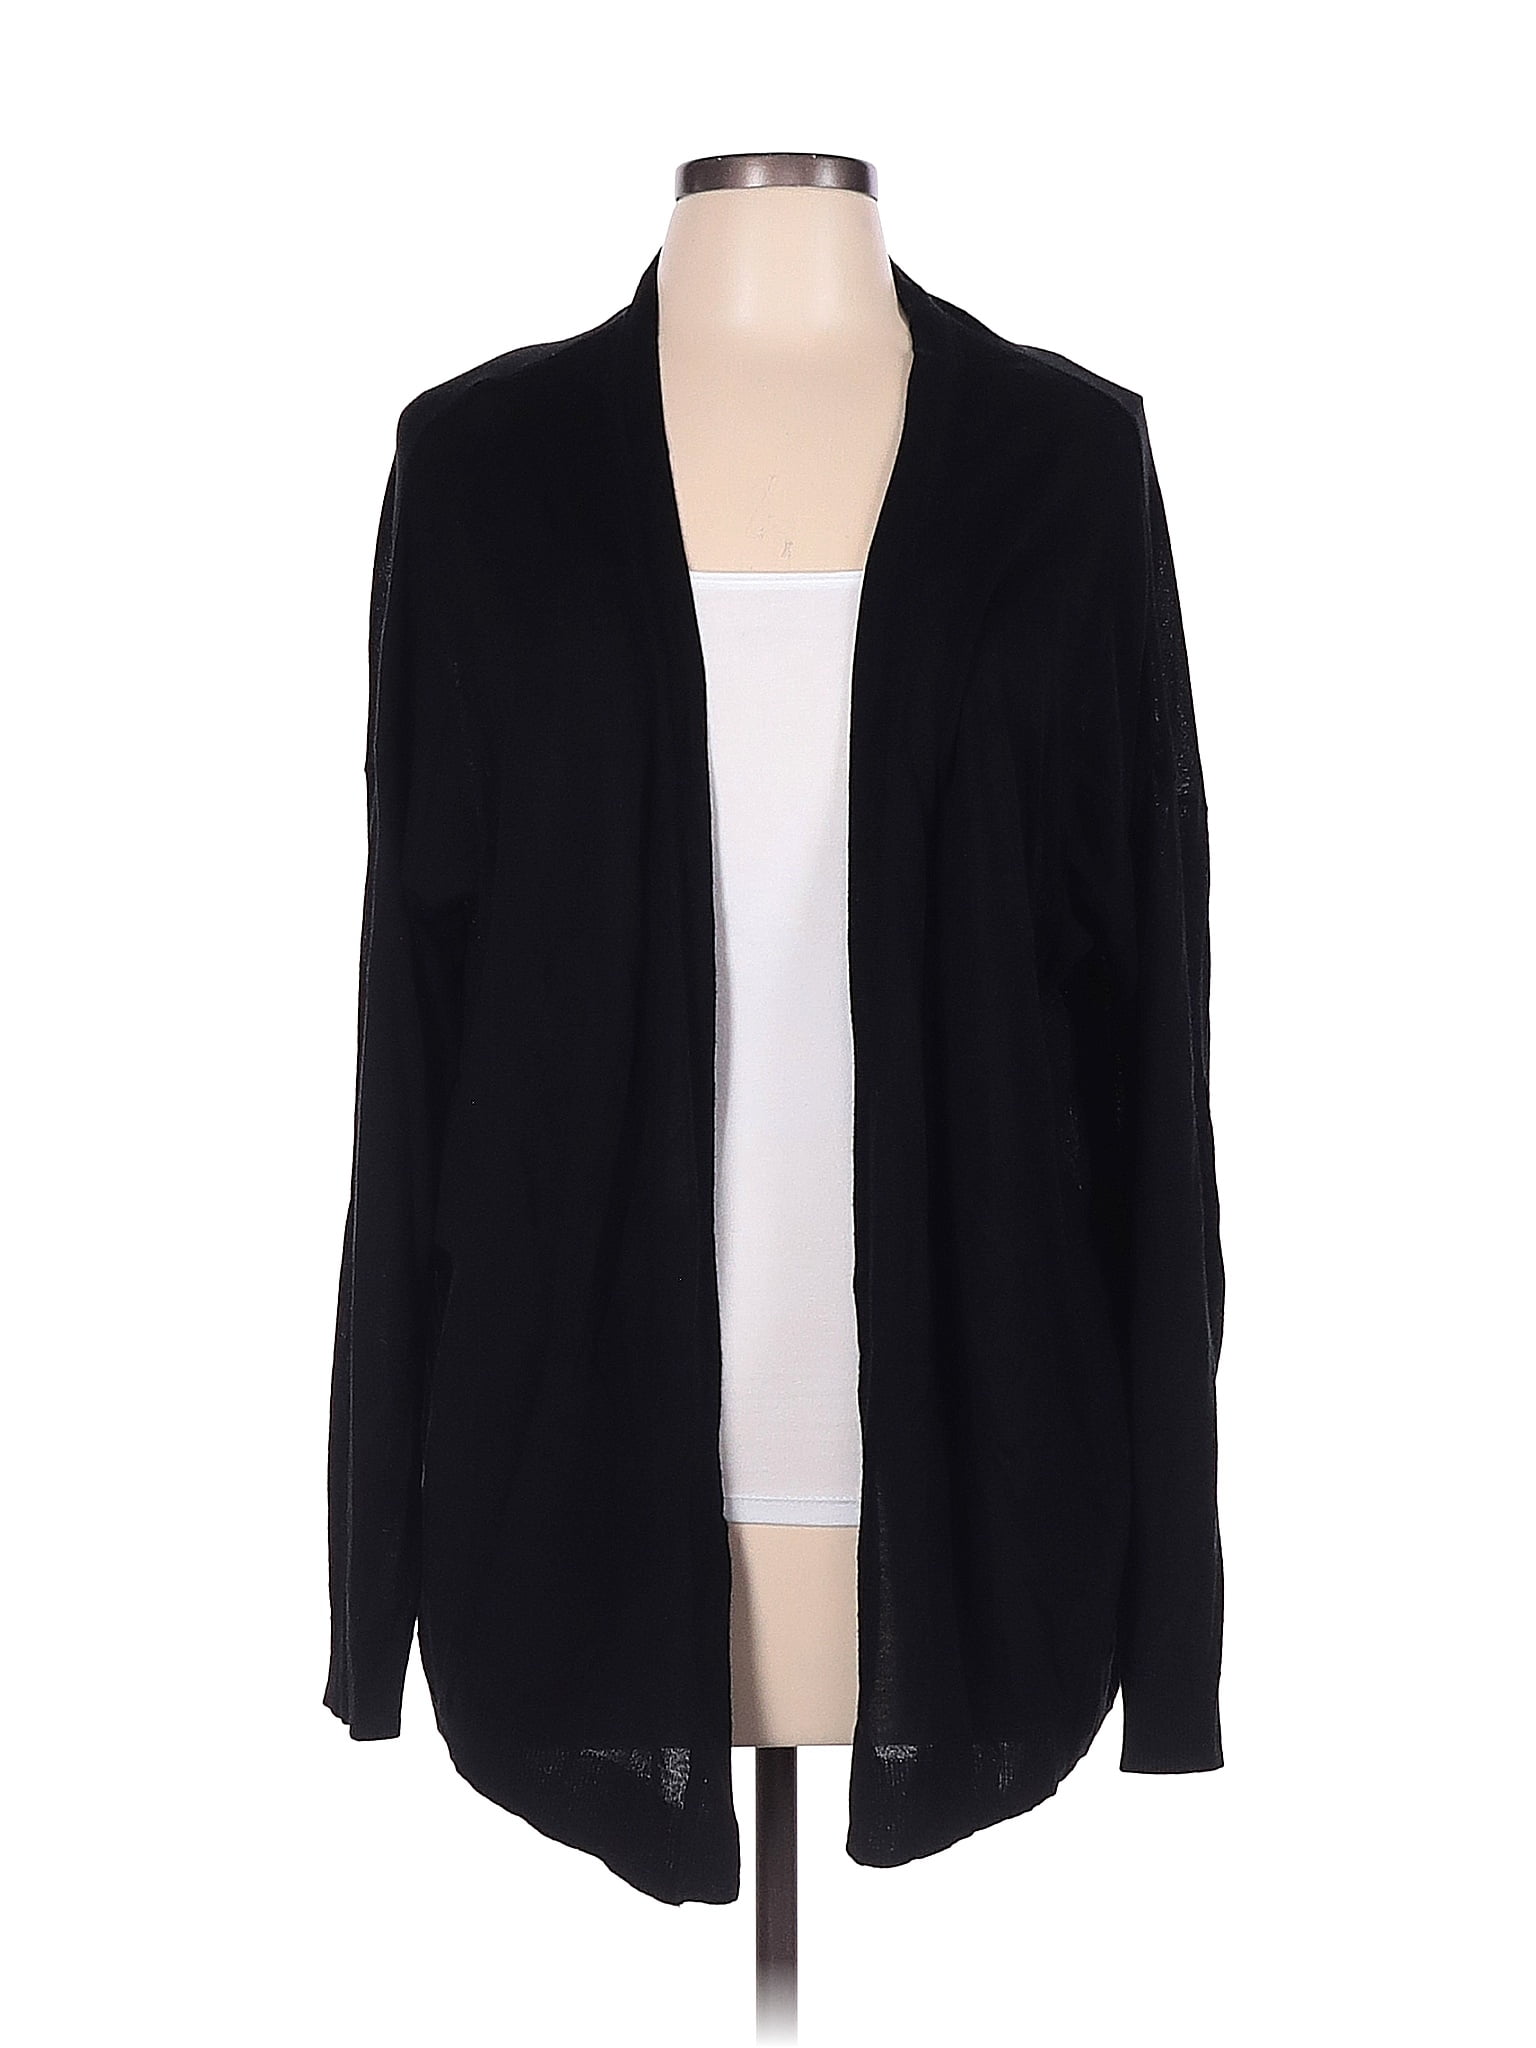 H&M Color Block Solid Black Cardigan Size L - 47% off | thredUP